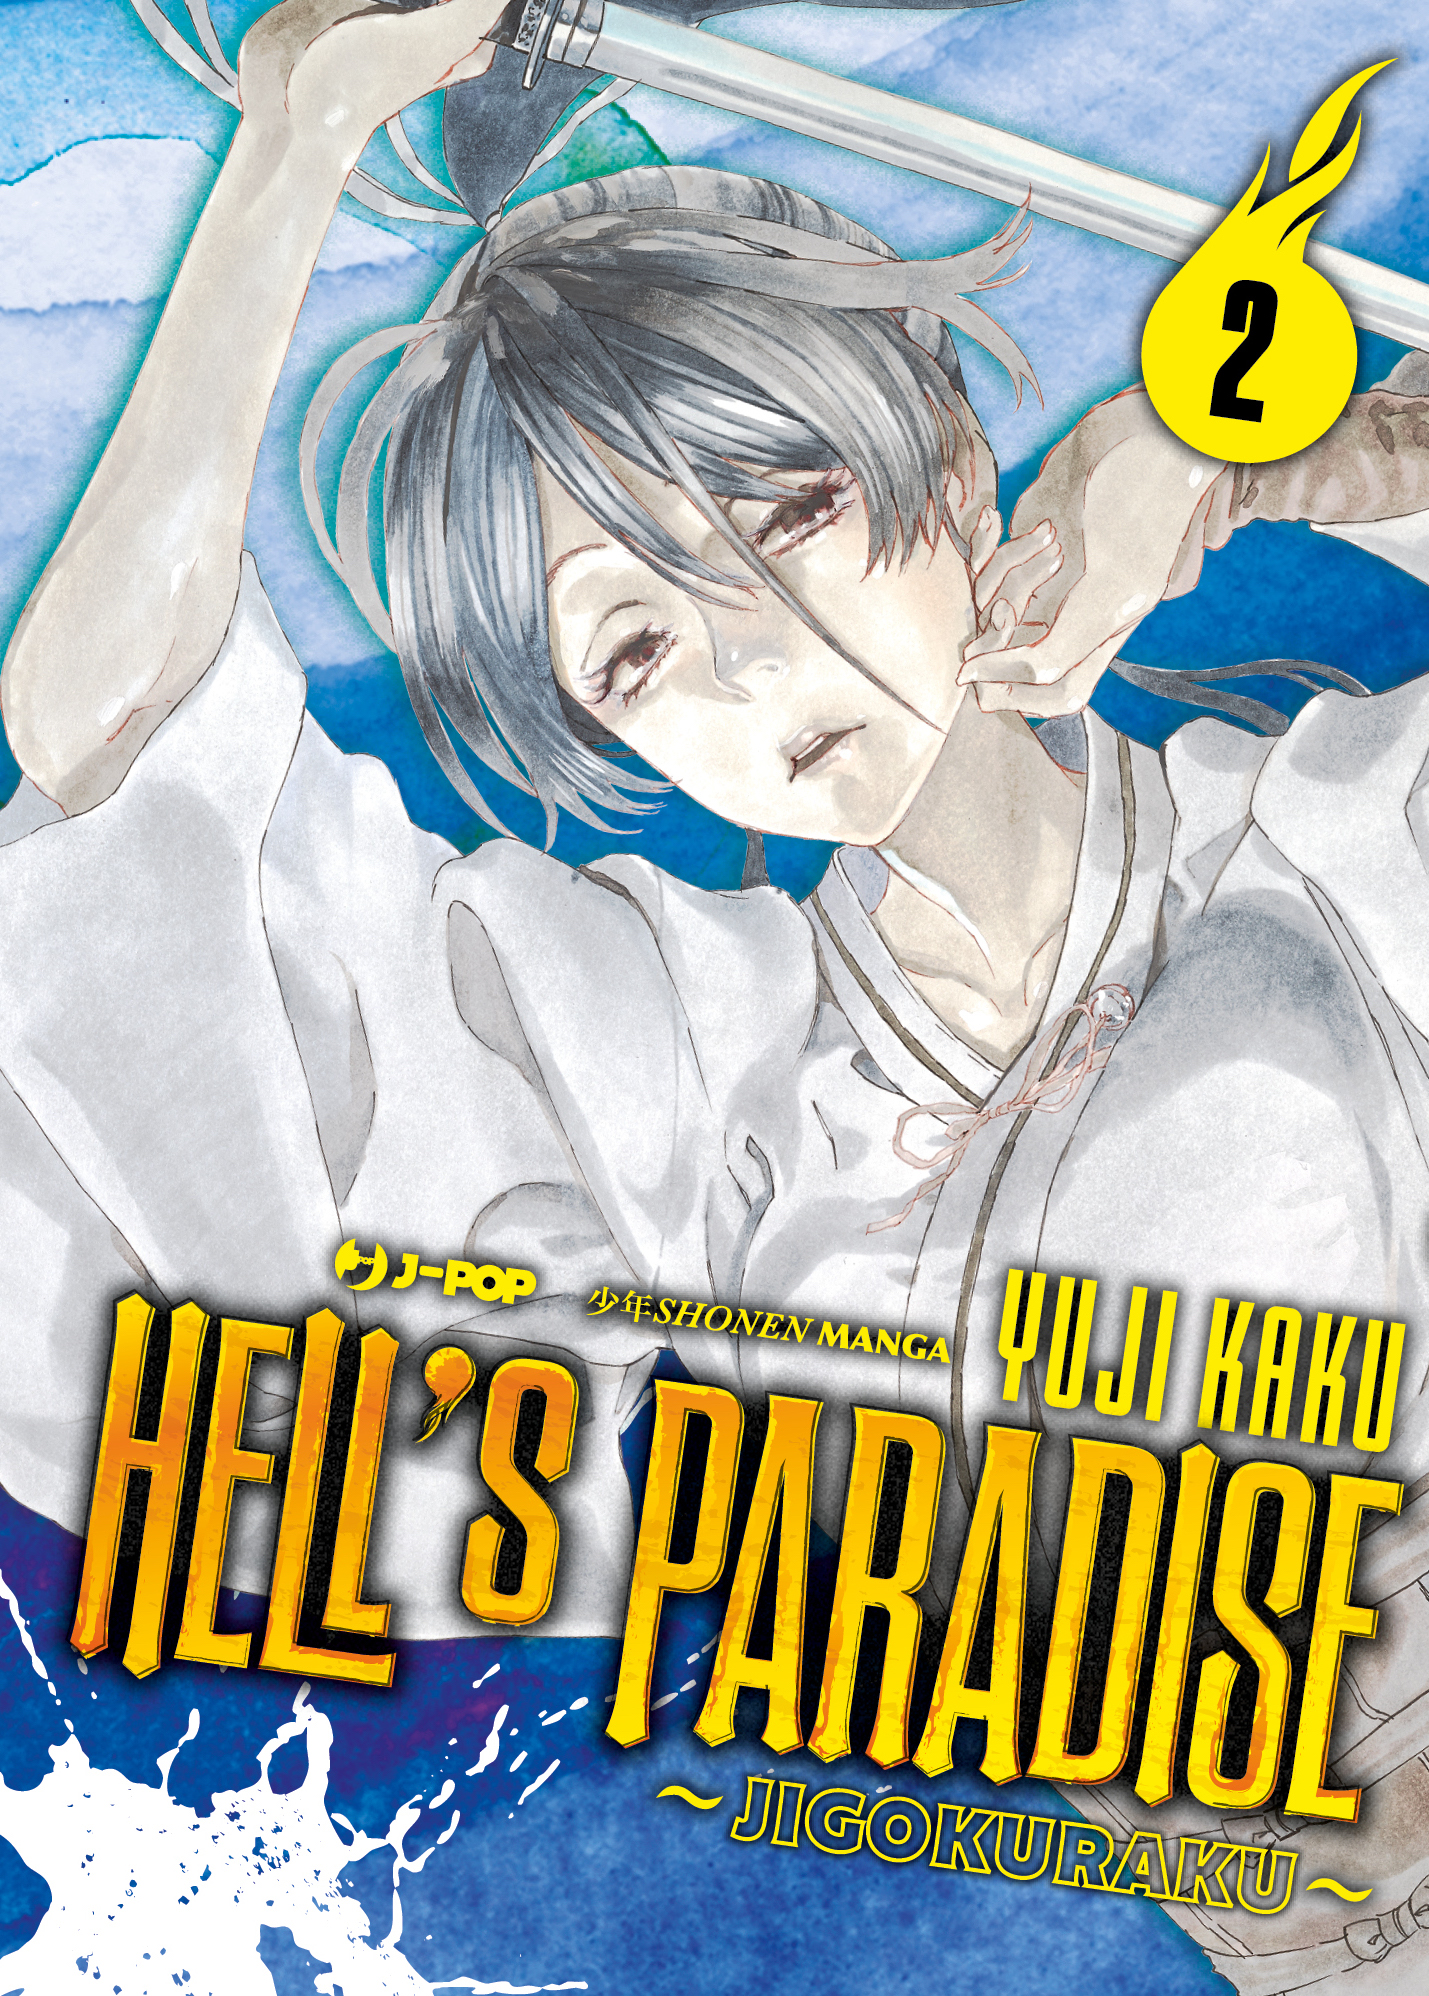 Hell's Paradise: Jigokuraku, Vol. 2 2 Paperback India